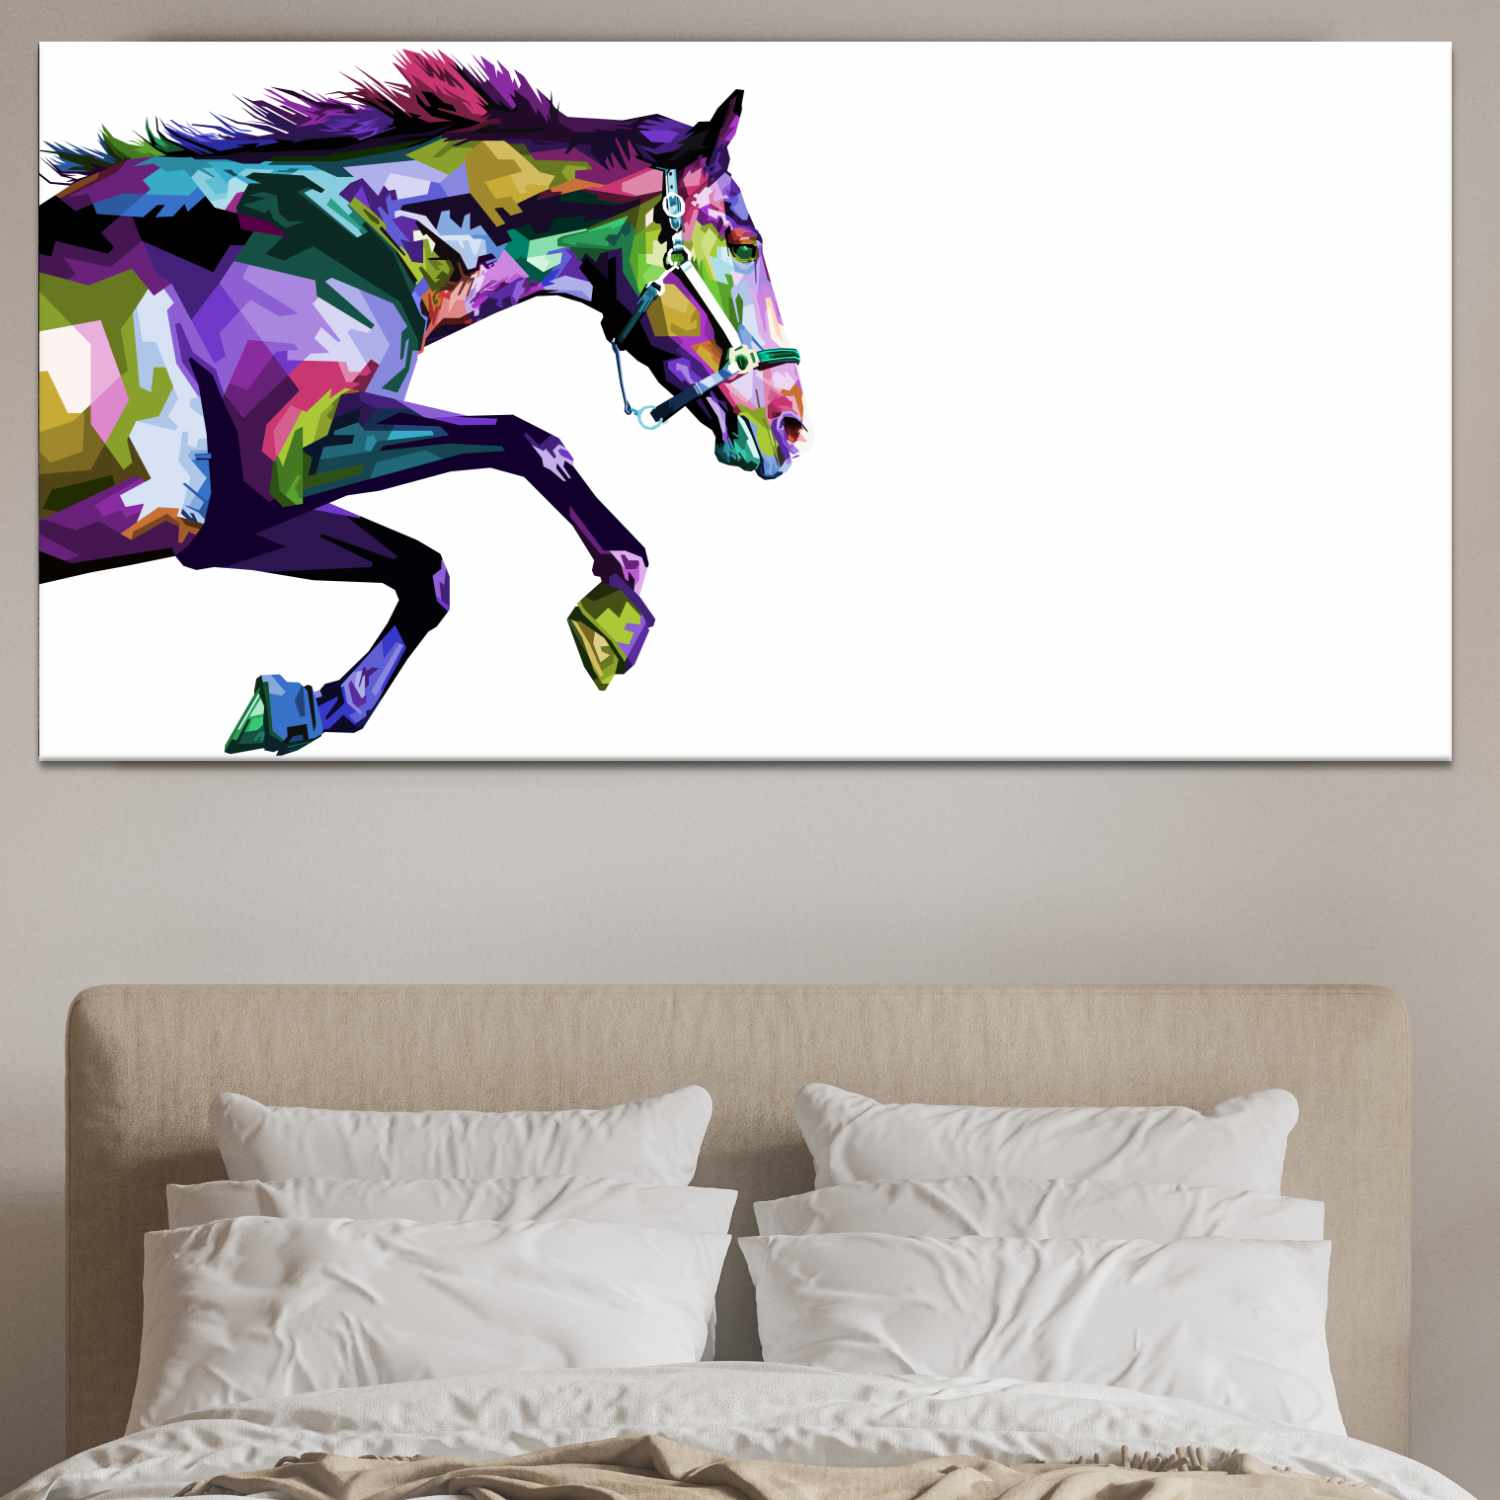 Bild häst pop vit bakgrund Bild djur Bild häst